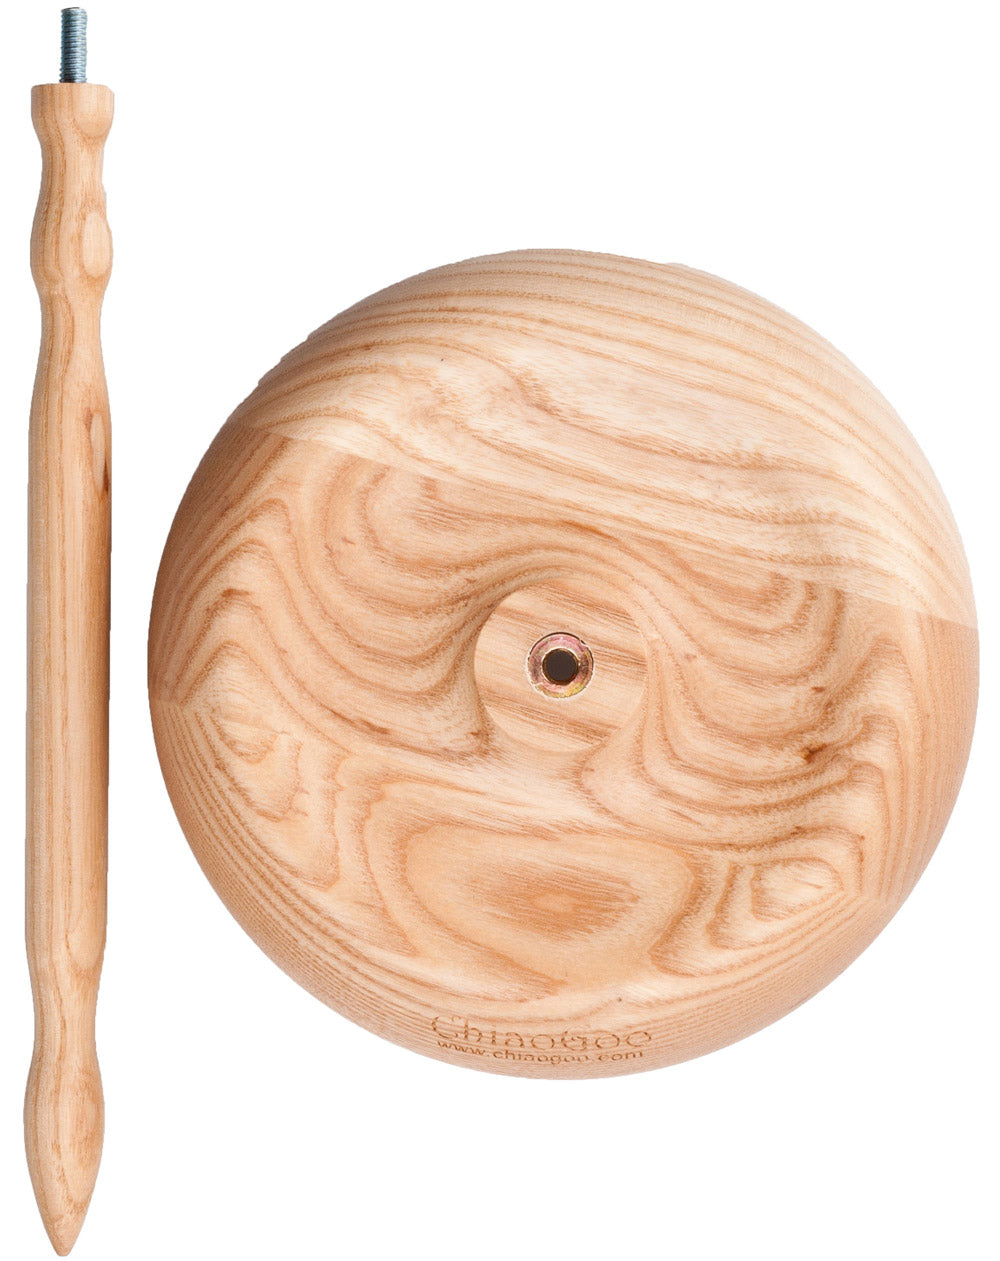 ChiaoGoo Wood Yarn Butler Yarn Ball Spins Easily Ball Bearings